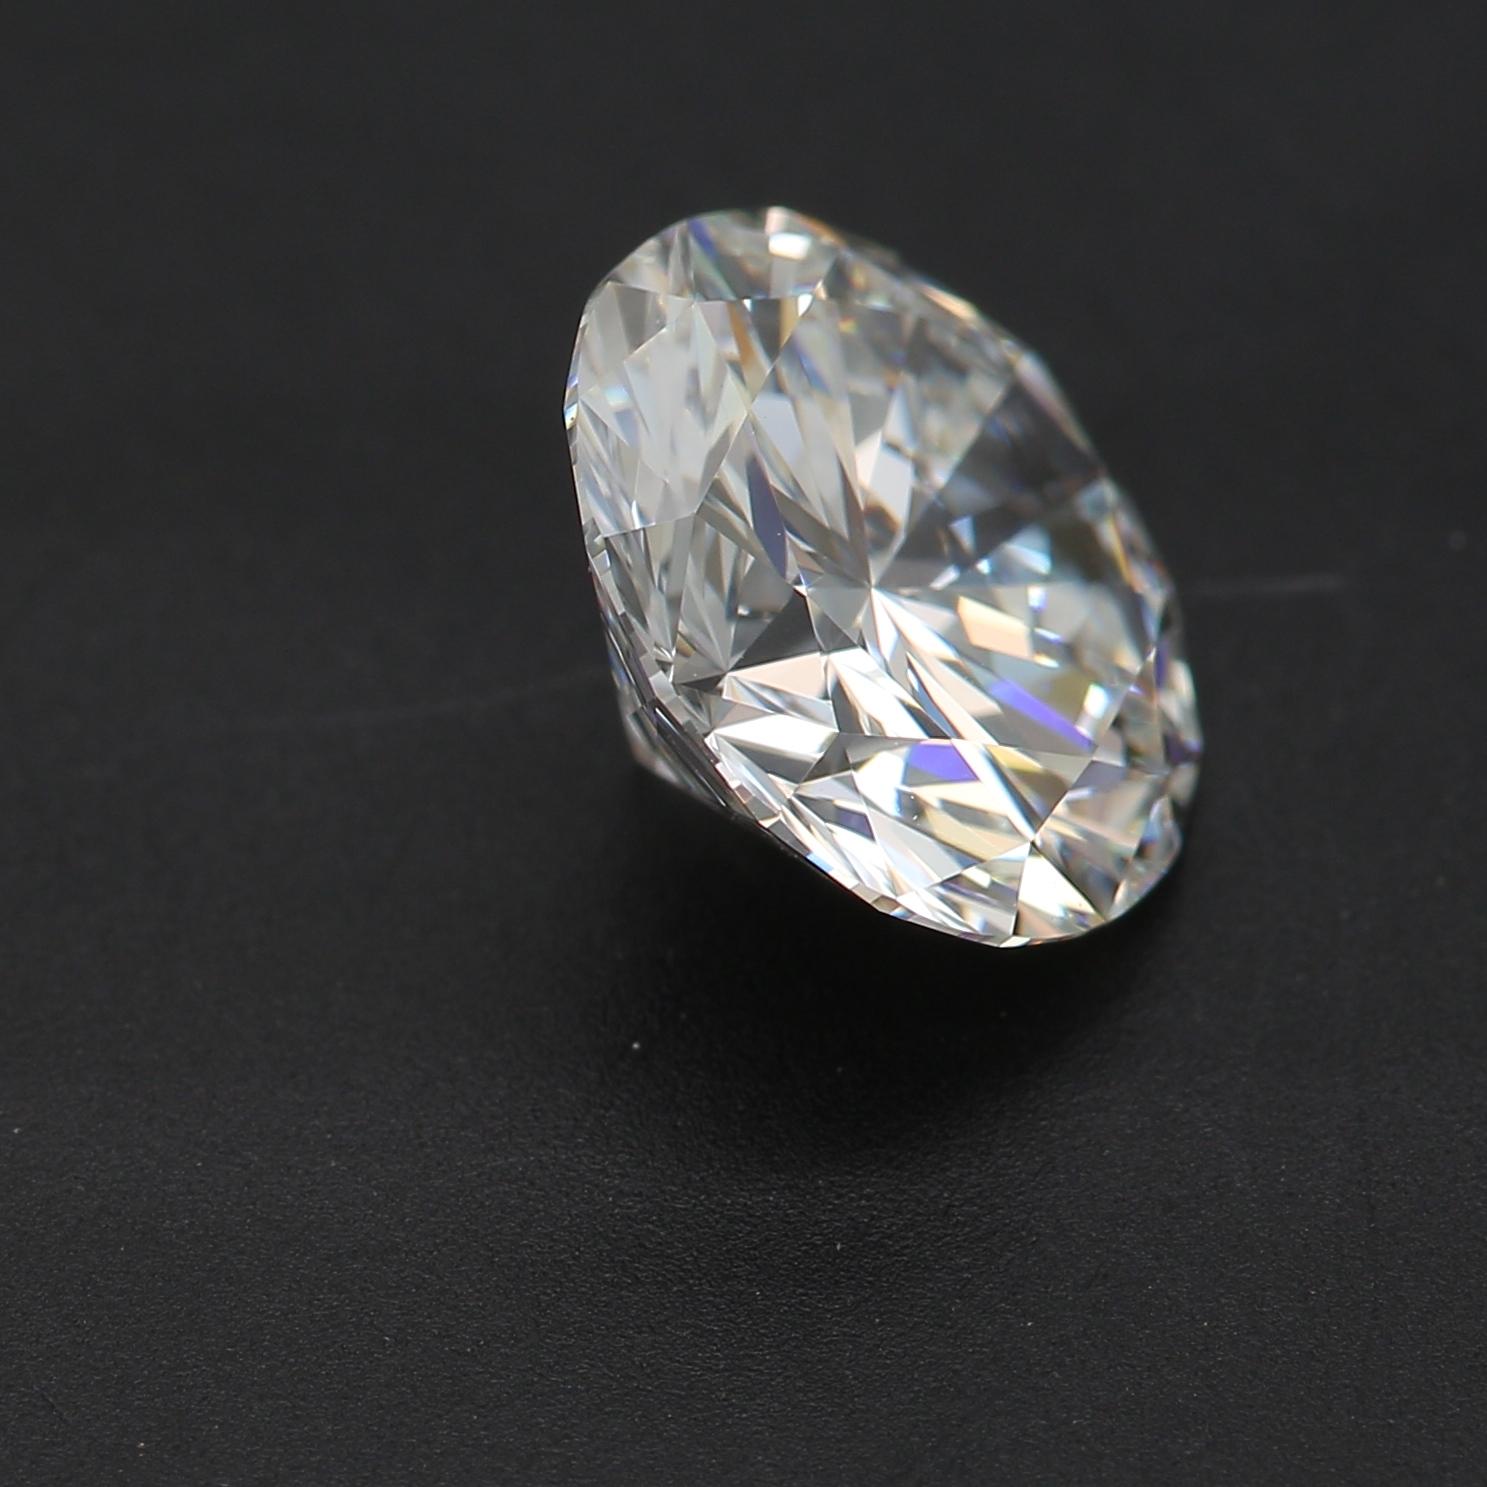 2.02 Carat Round Cut Diamond VVS1 Clarity GIA Certified For Sale 1